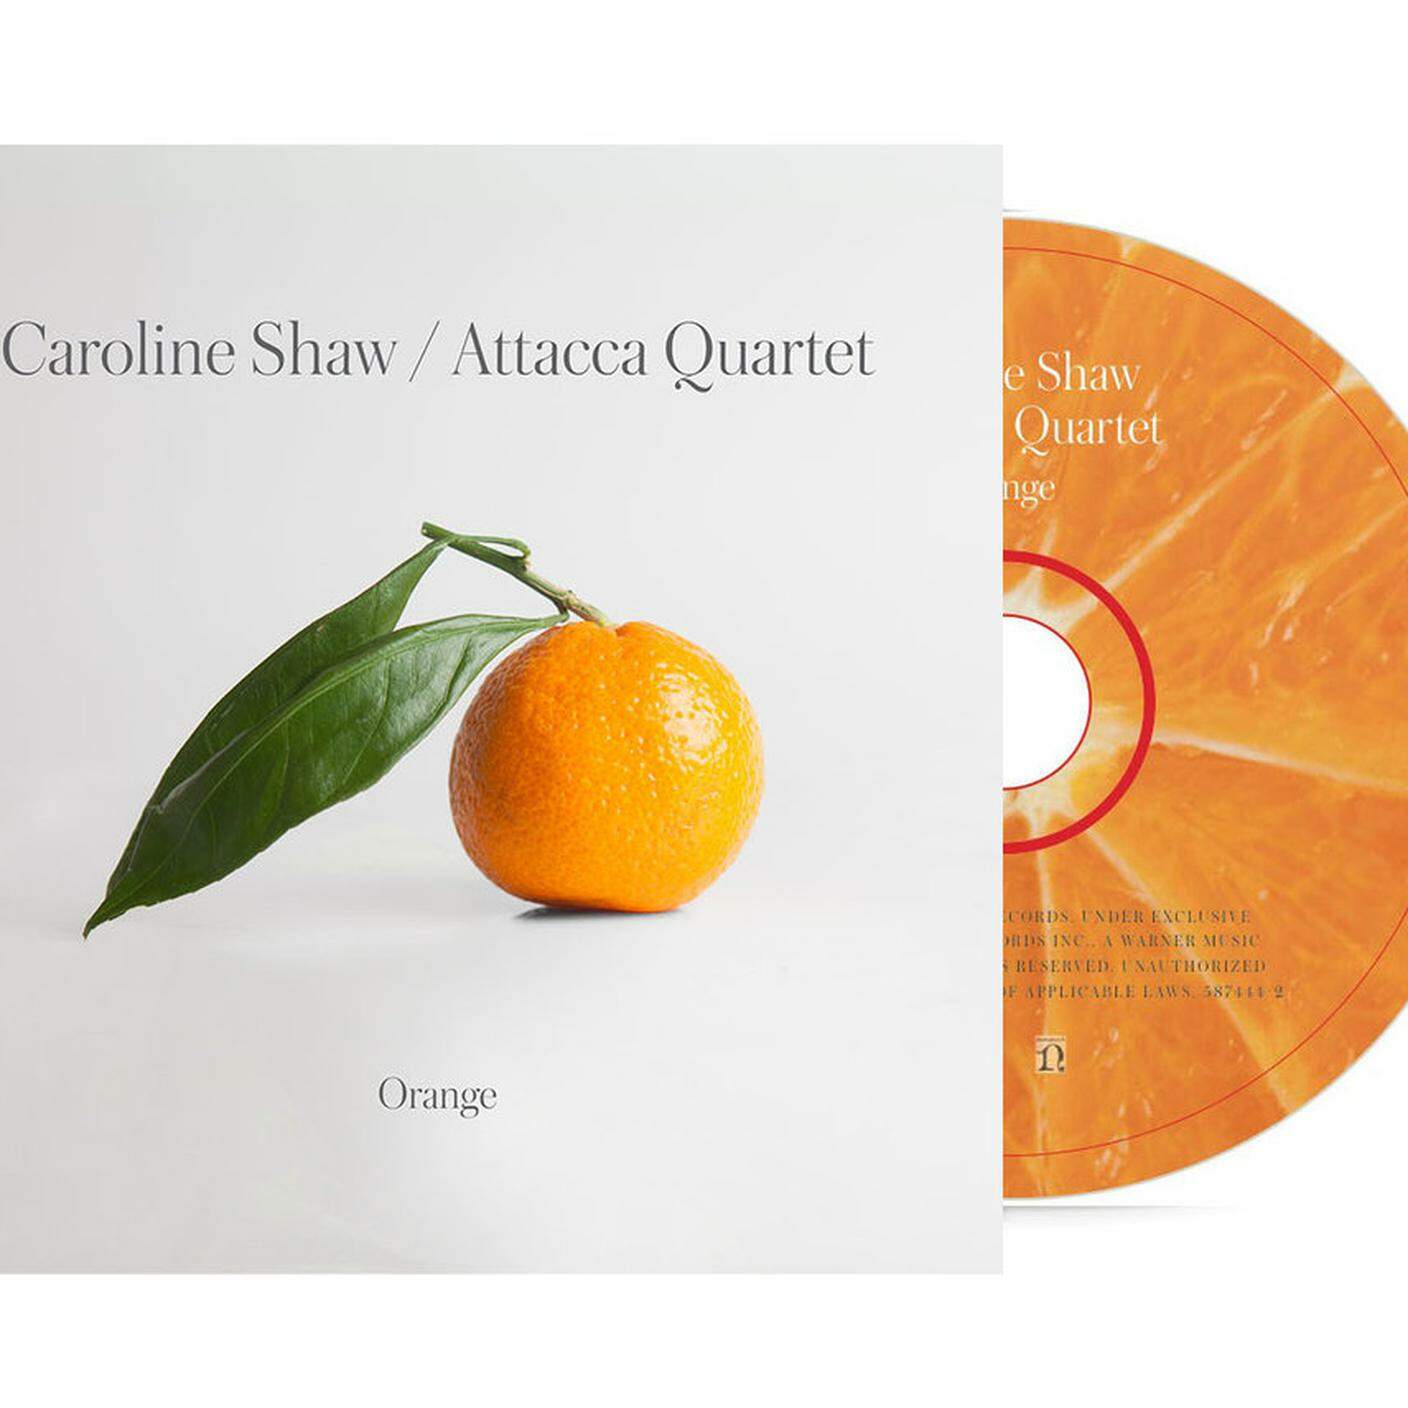 Caroline Shaw & Attacca Quartet; "Orange", New Amsterdam/Nonesuch (dettaglio copertina)